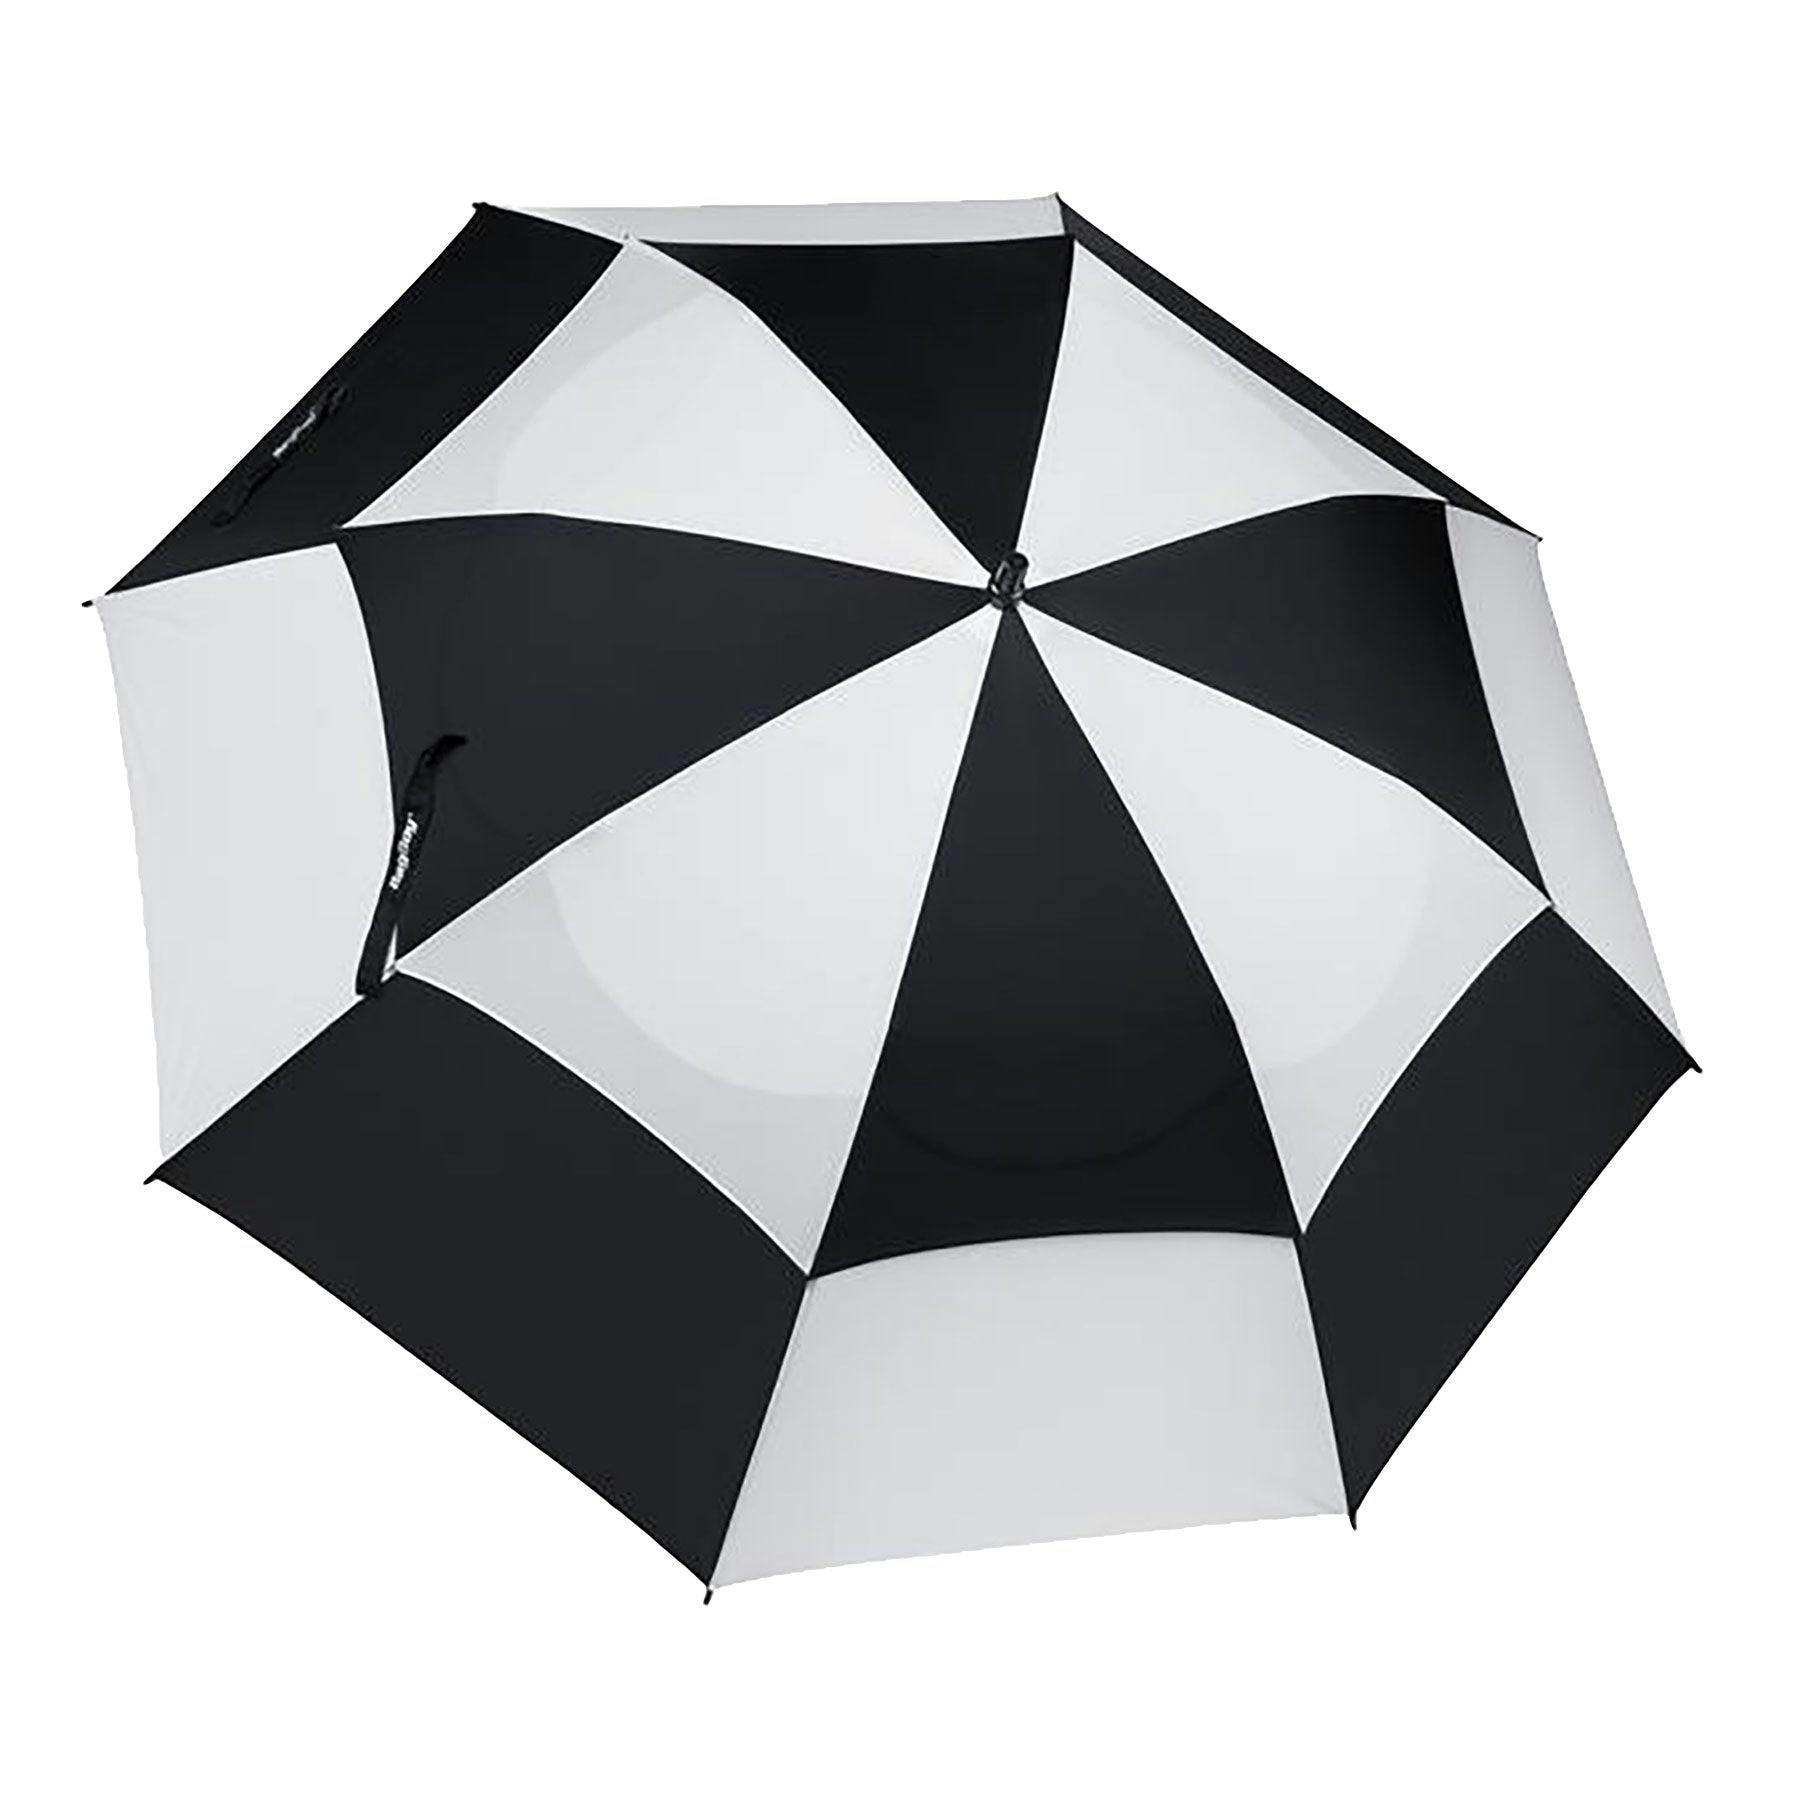 Bag Boy 62inch Wind Vent Manual Umbrella - Black/White